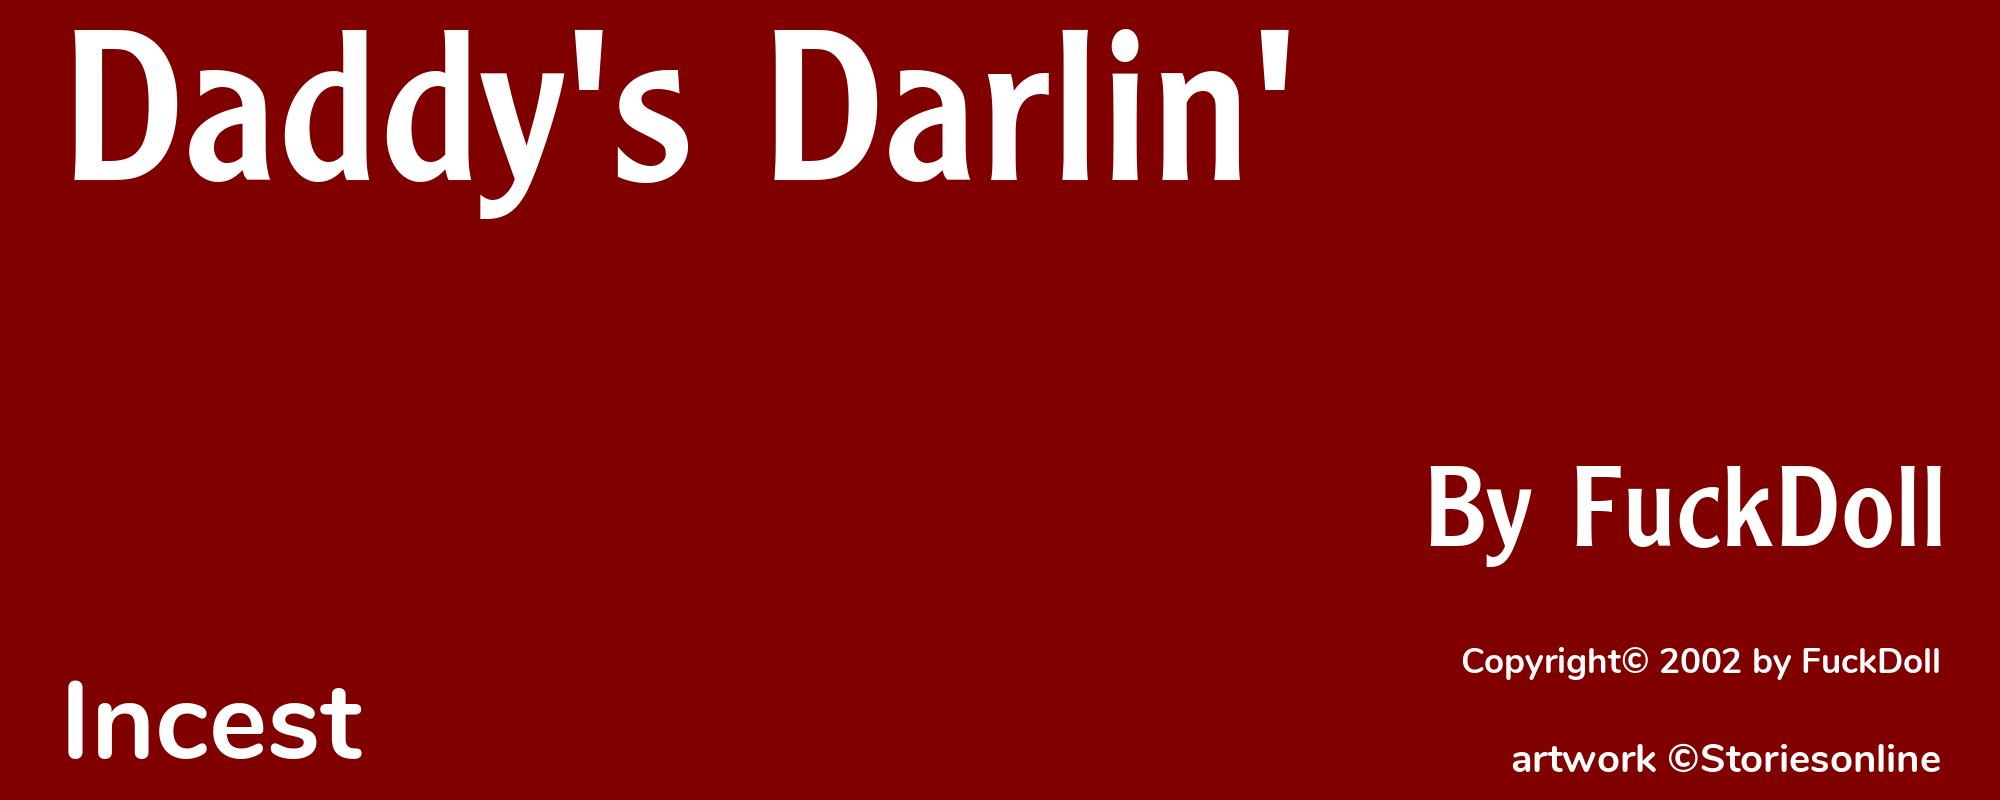 Daddy's Darlin' - Cover